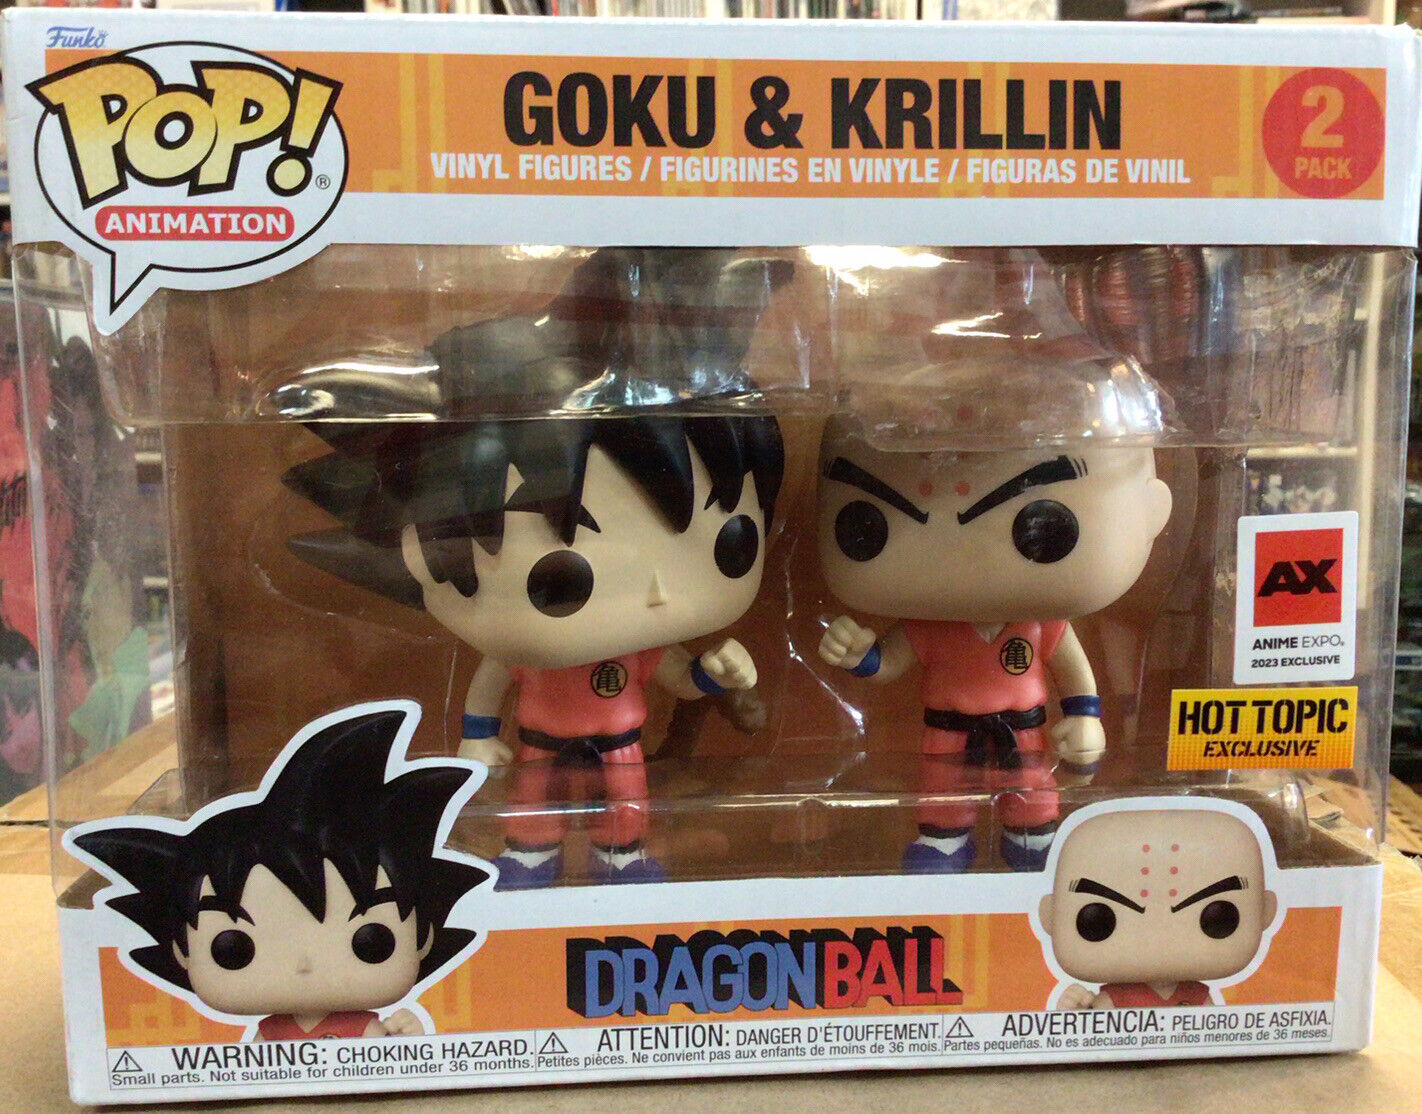 Anime Expo 2023 Exclusive: Funko Pop - Goku & Krillin